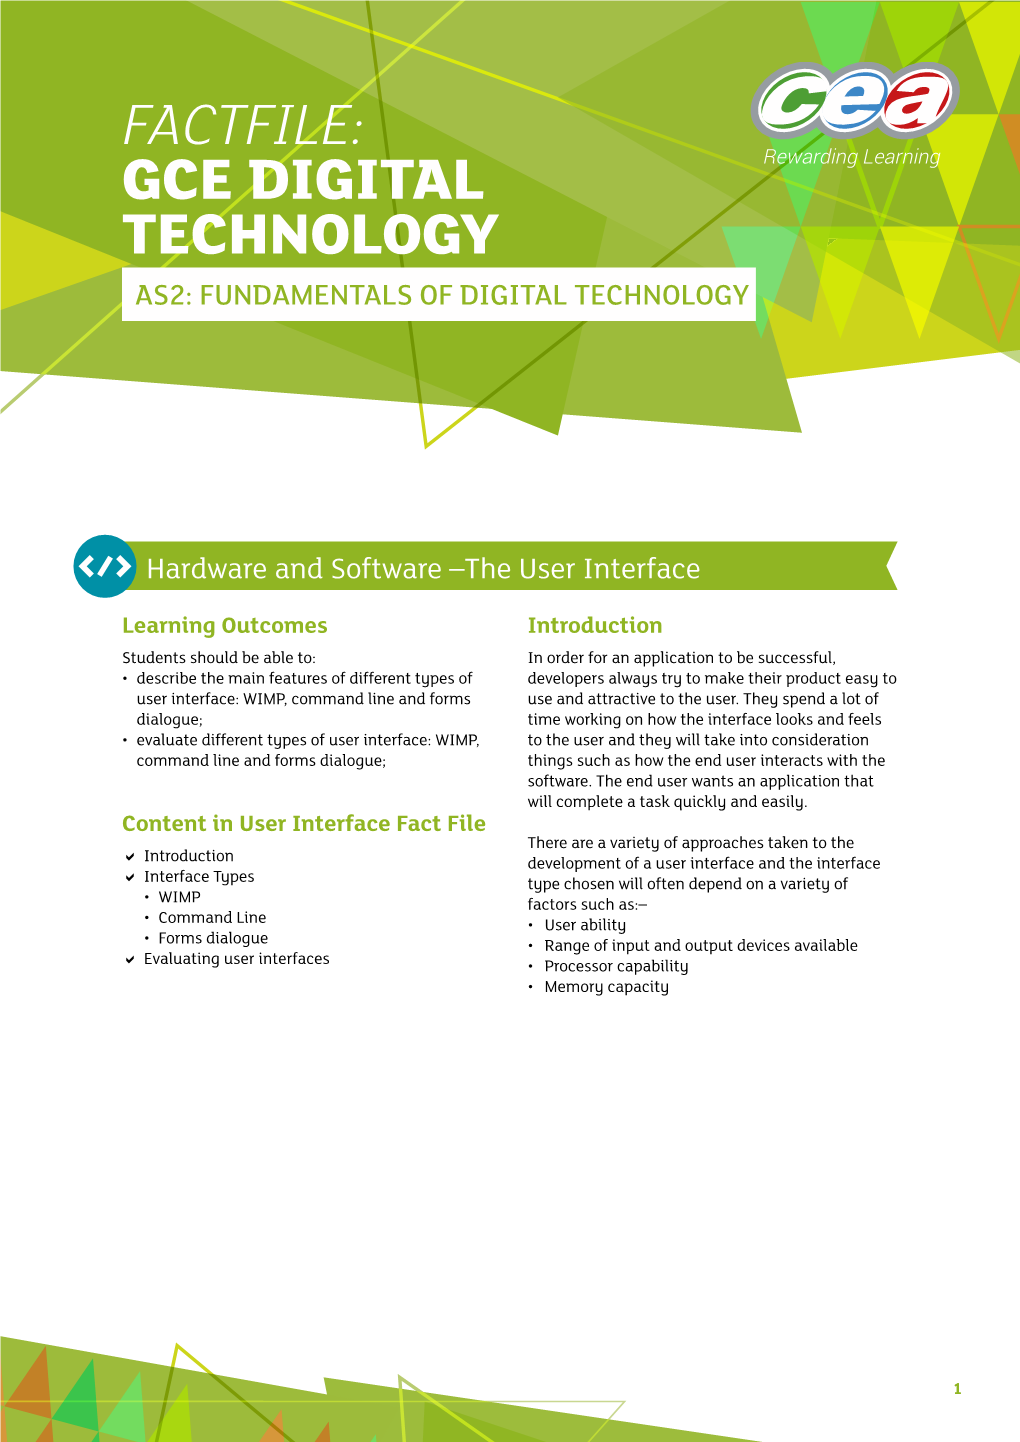 Factfile: Gce Digital Technology As2: Fundamentals of Digital Technology